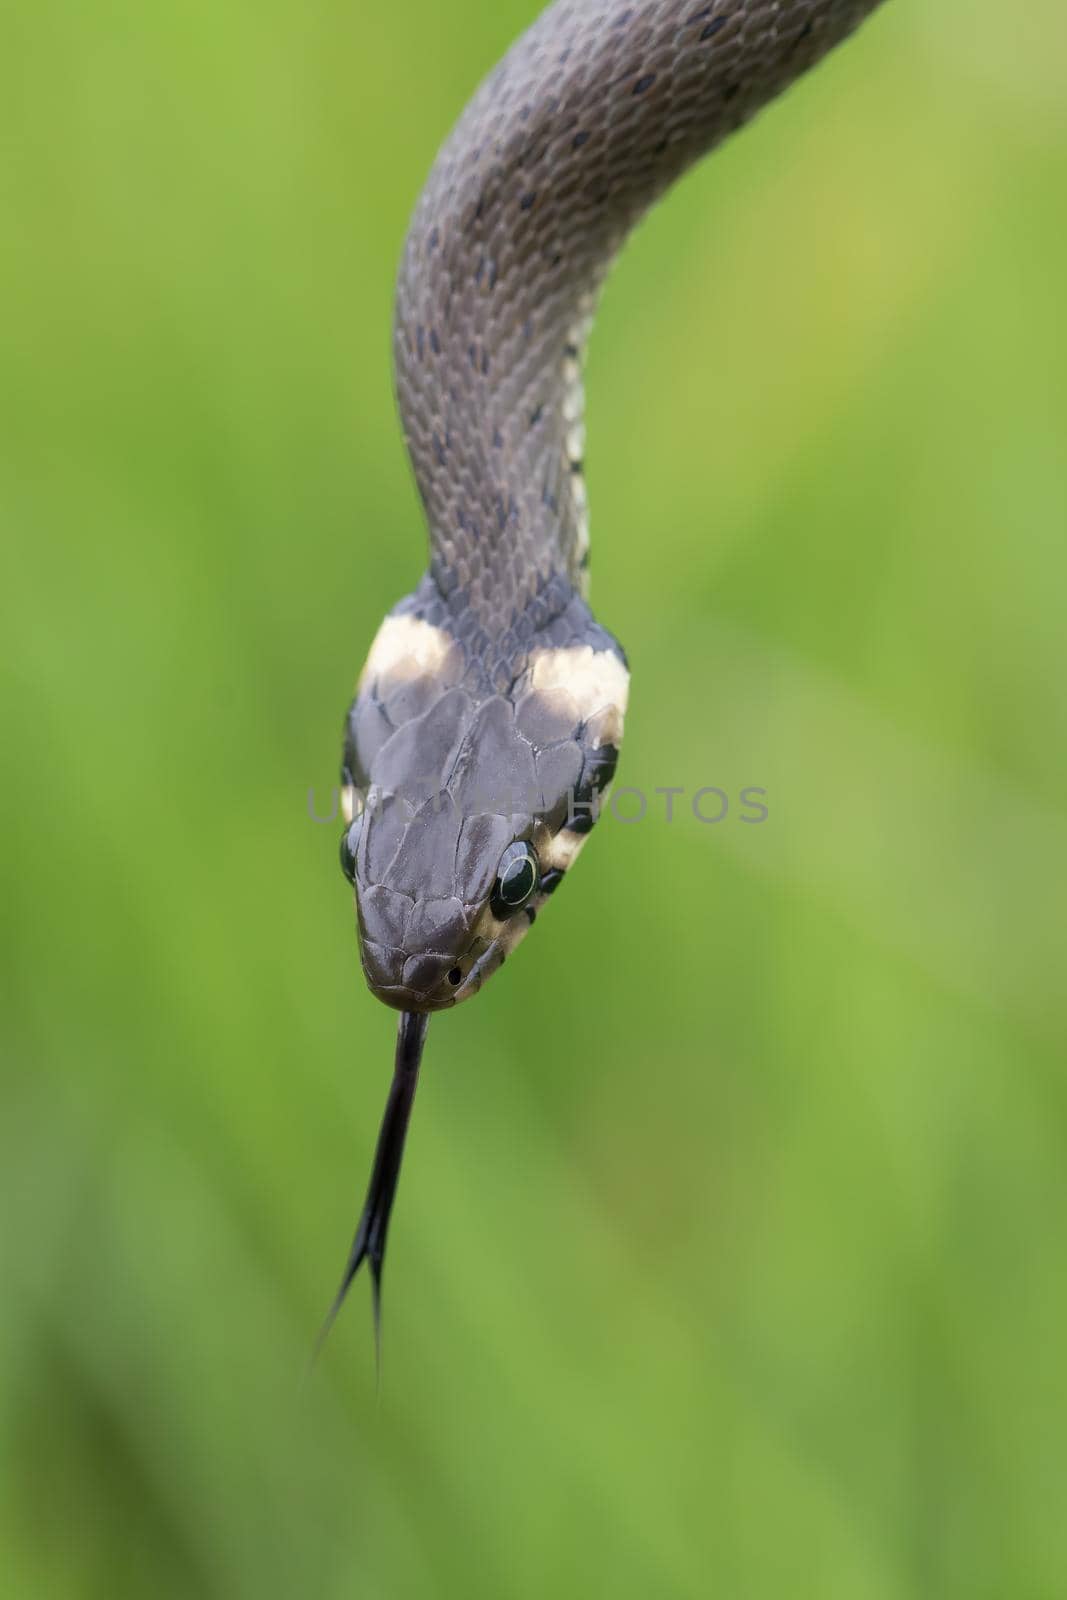 harmless small snake, grass snake, Natrix natrix by artush